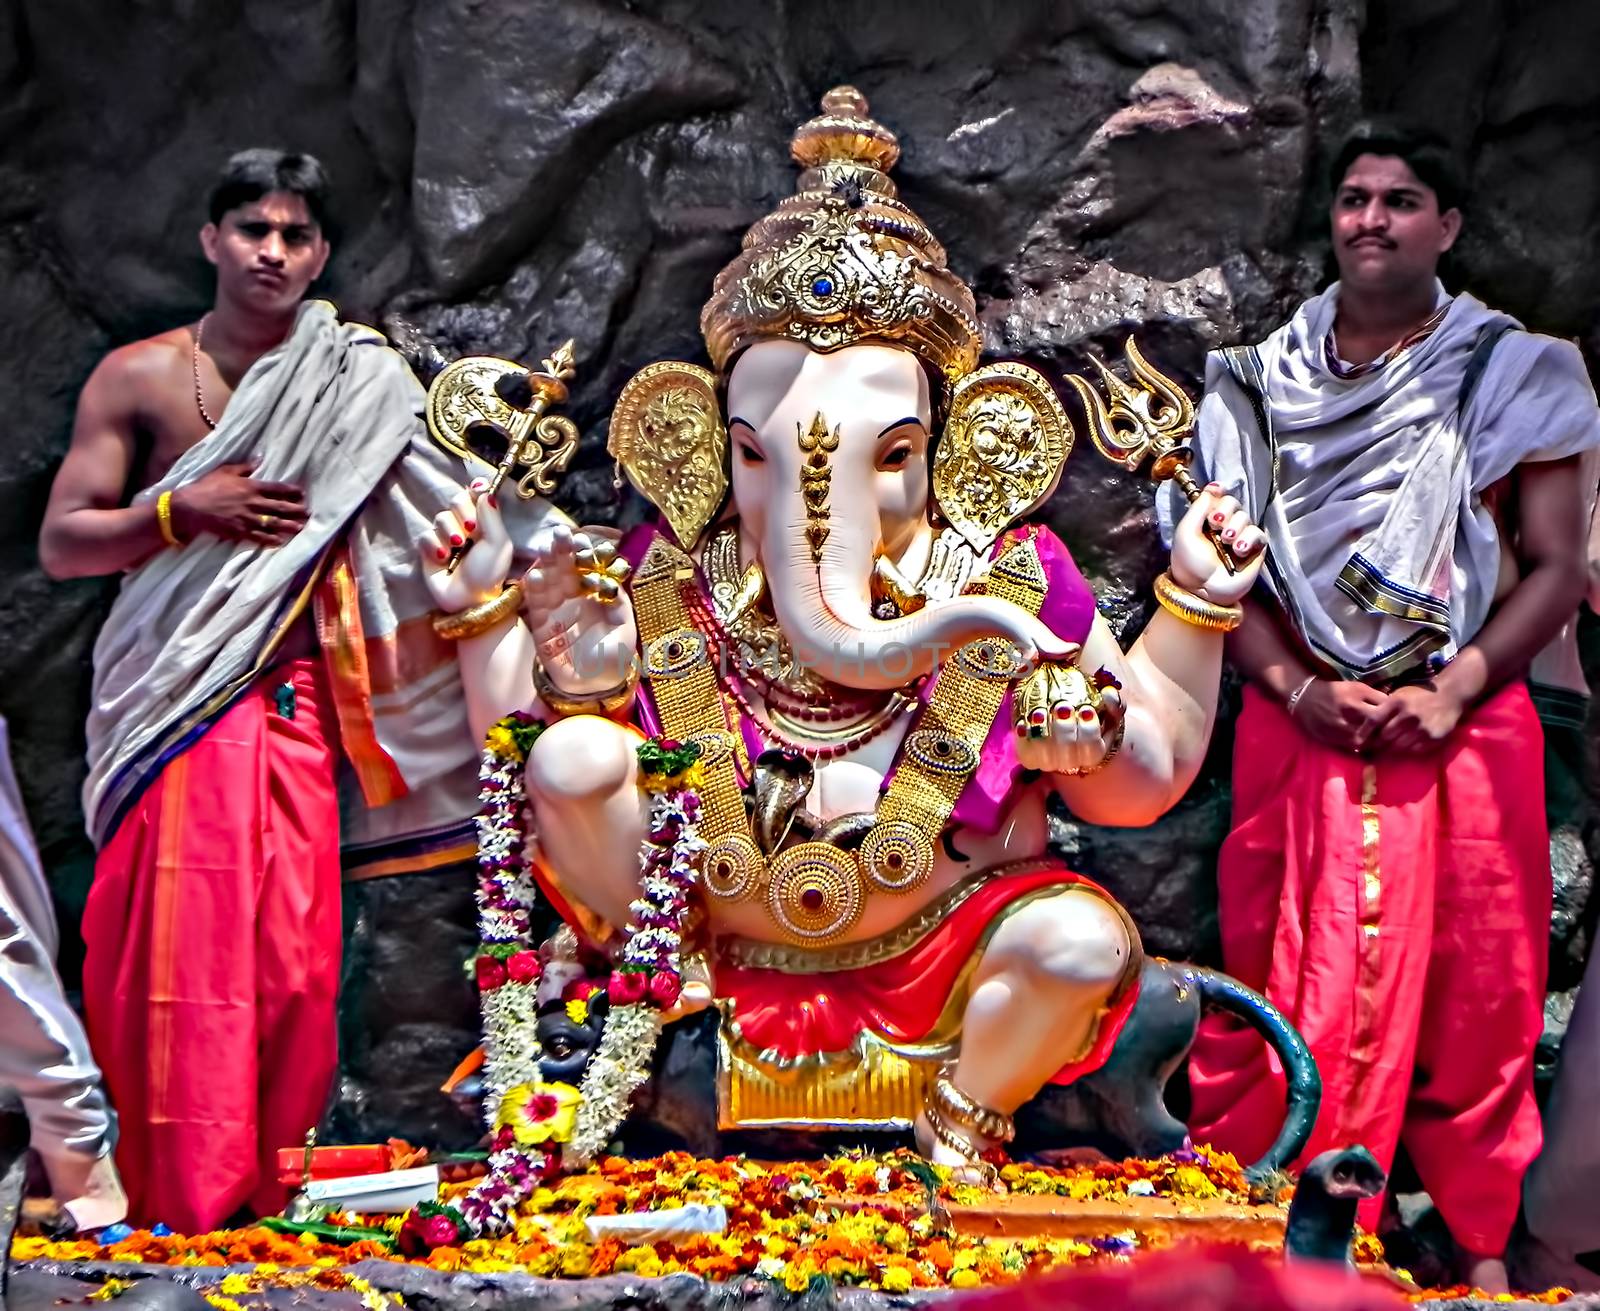 Decorated & garlanded huge idol of Hindu God Ganesha during fest by lalam